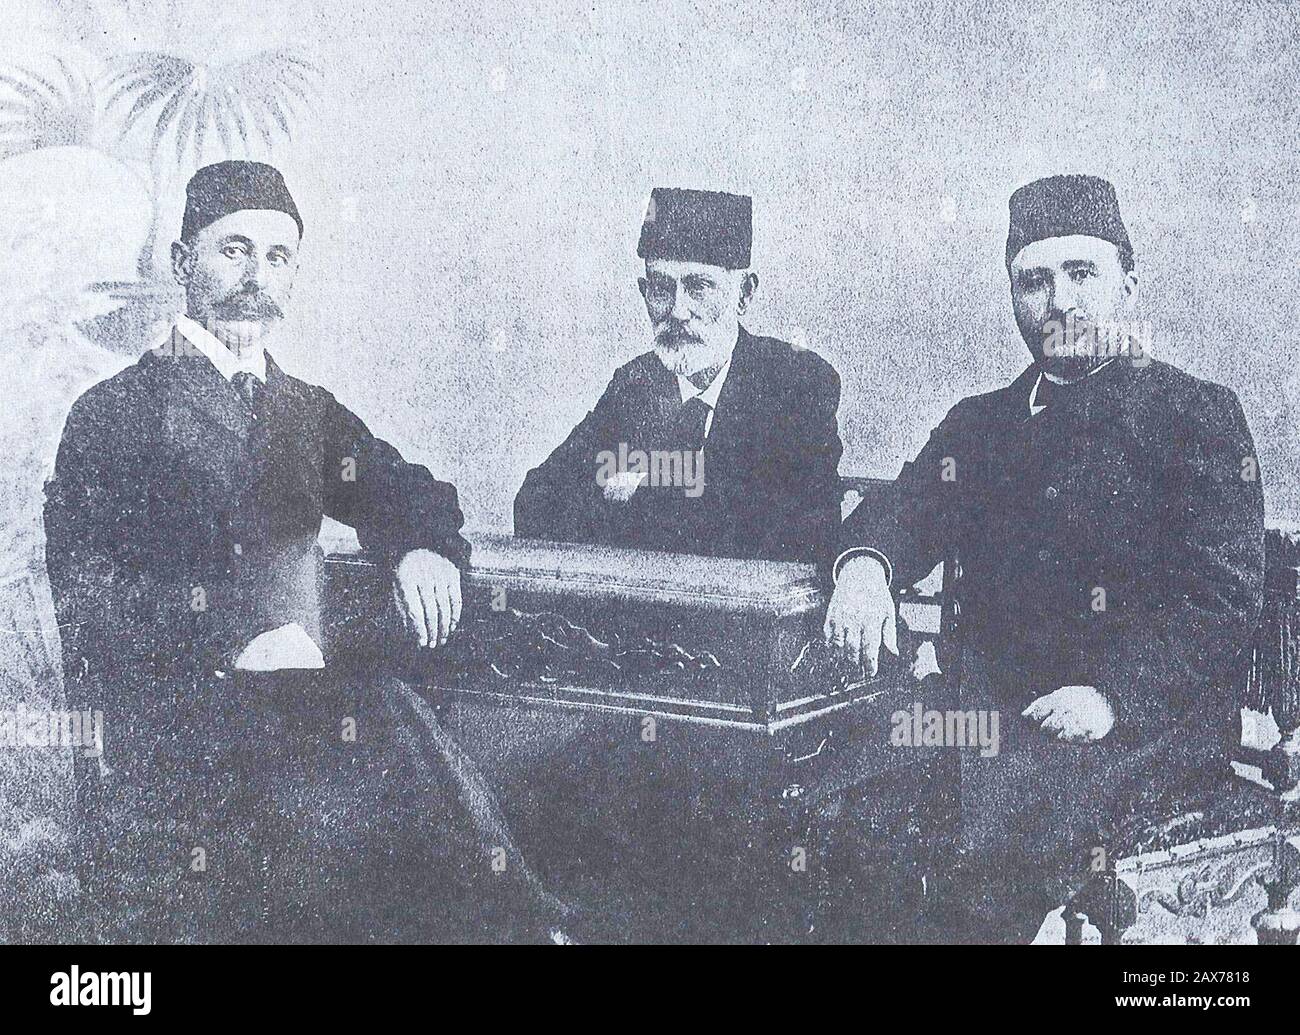 Ismail Gasprinsky, Hasan bey Zardabi and Alimardan Topchubashov. Stock Photo